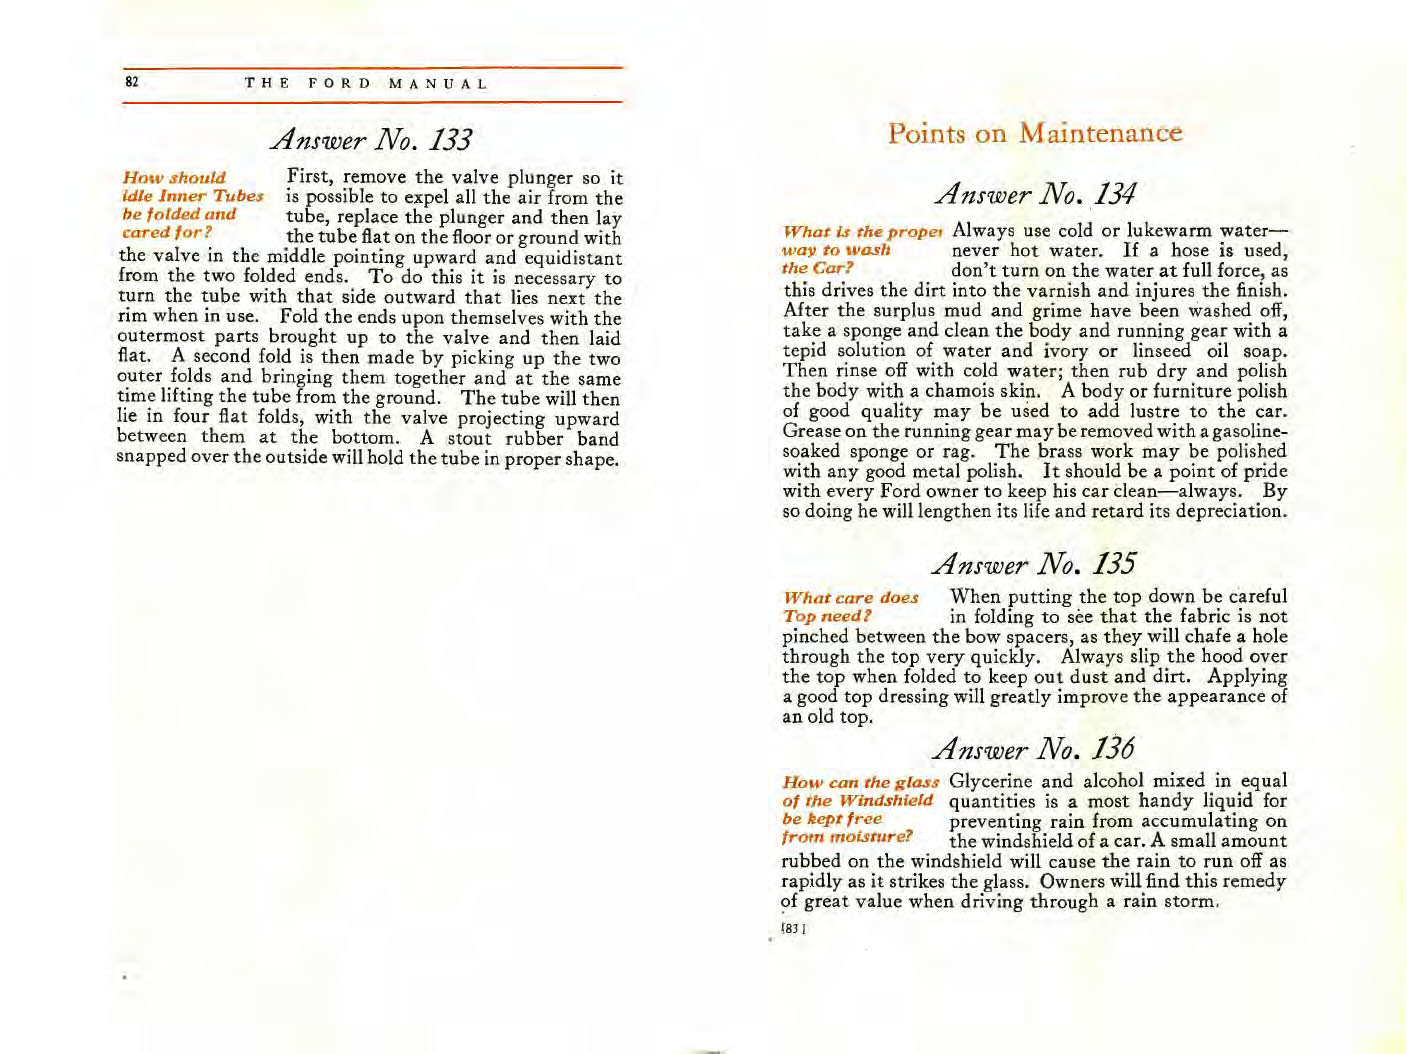 n_1915 Ford Owners Manual-82-83.jpg